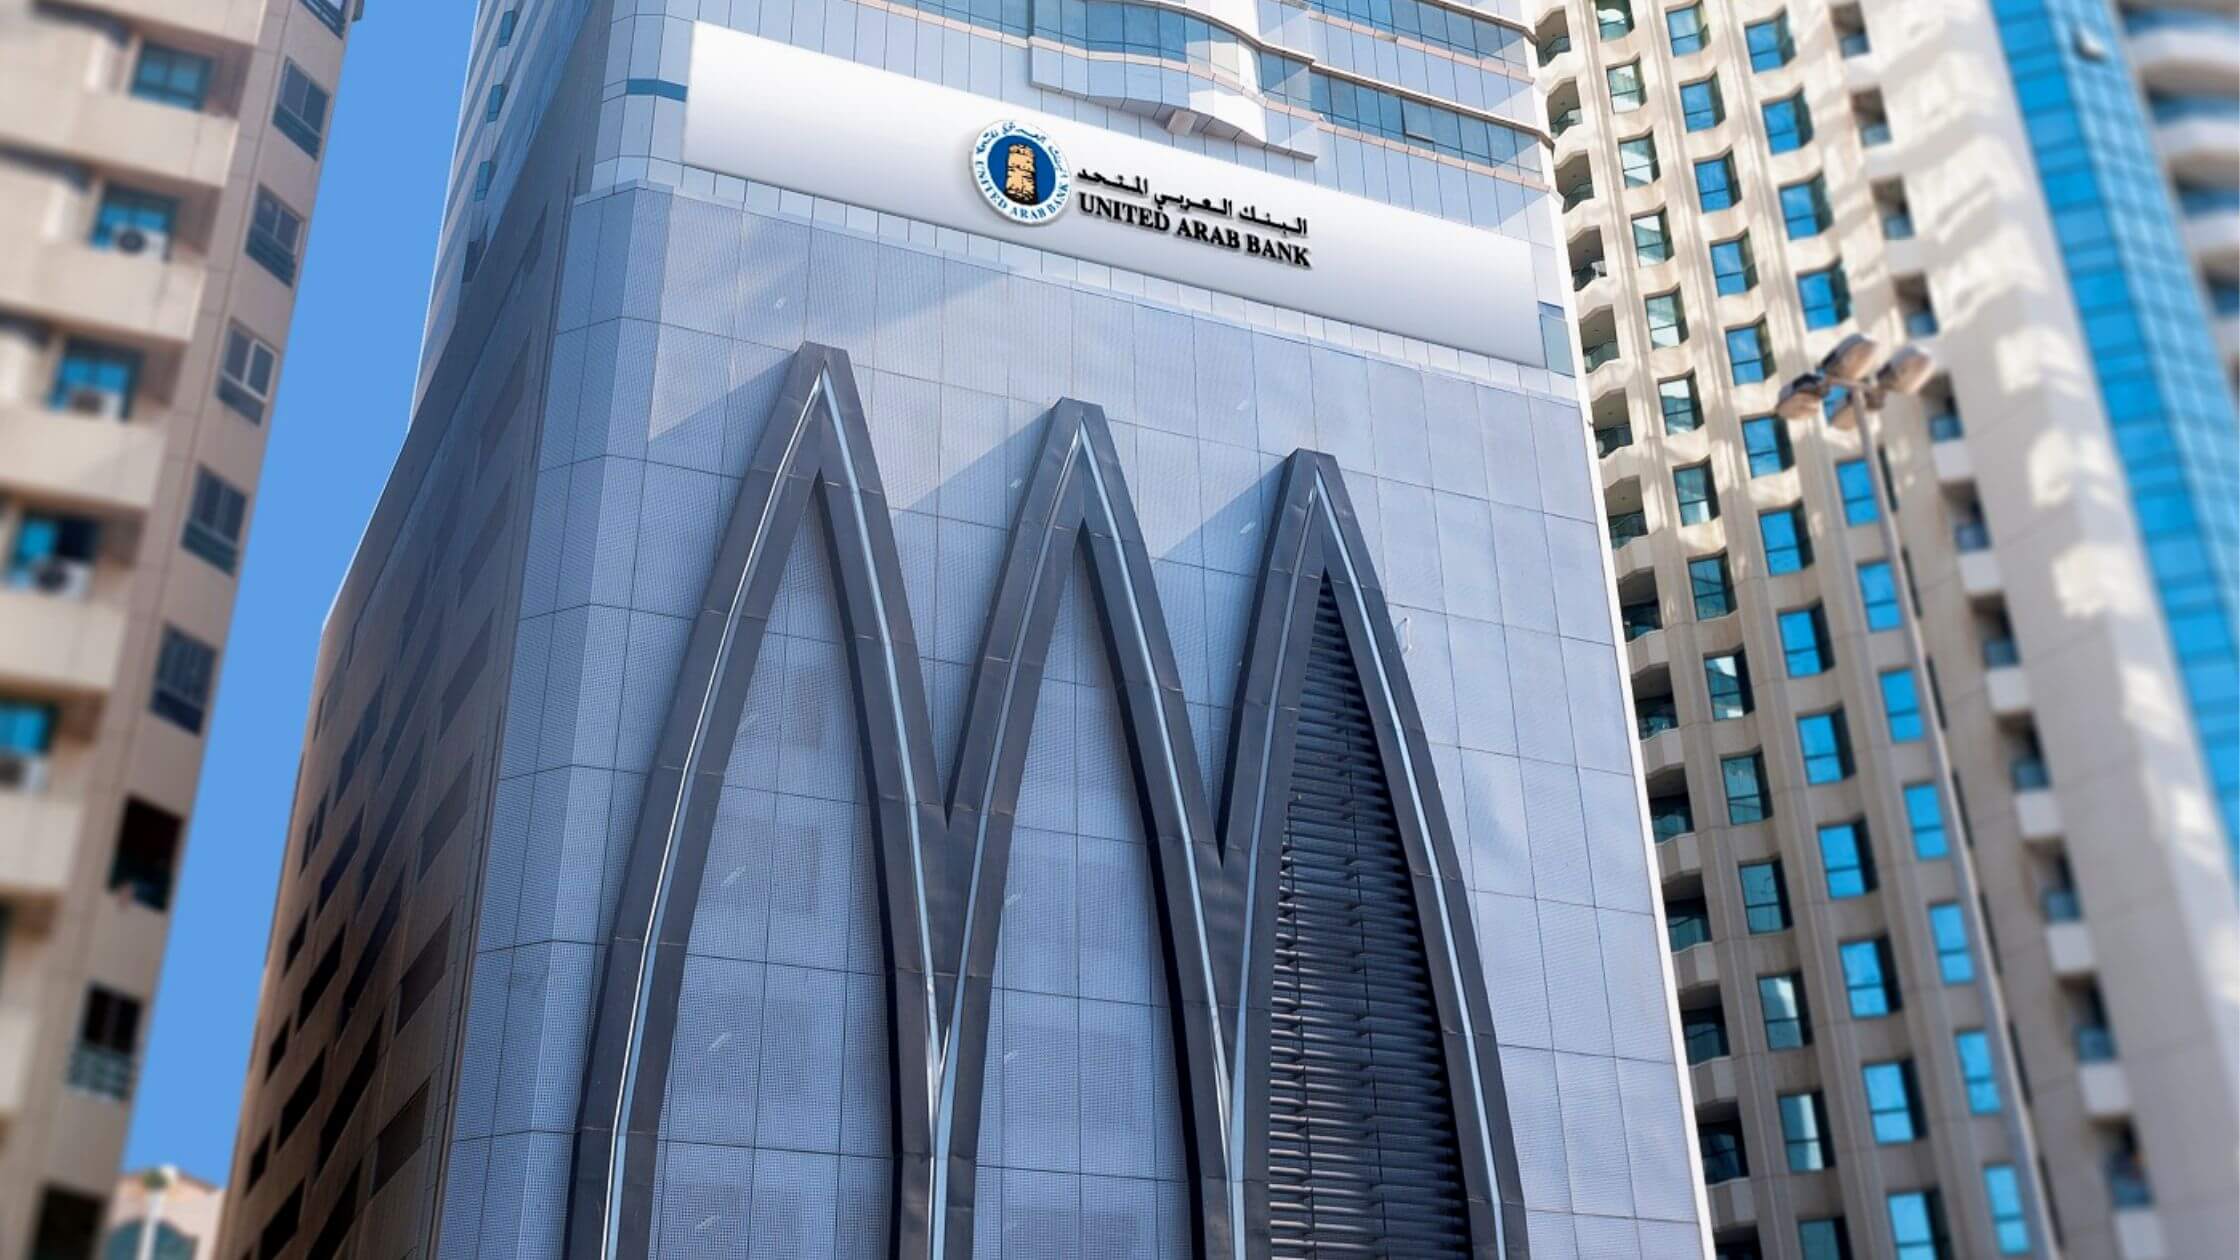 Tomouh! A New Initiative By United Arab Bank To Help Emirati Graduates